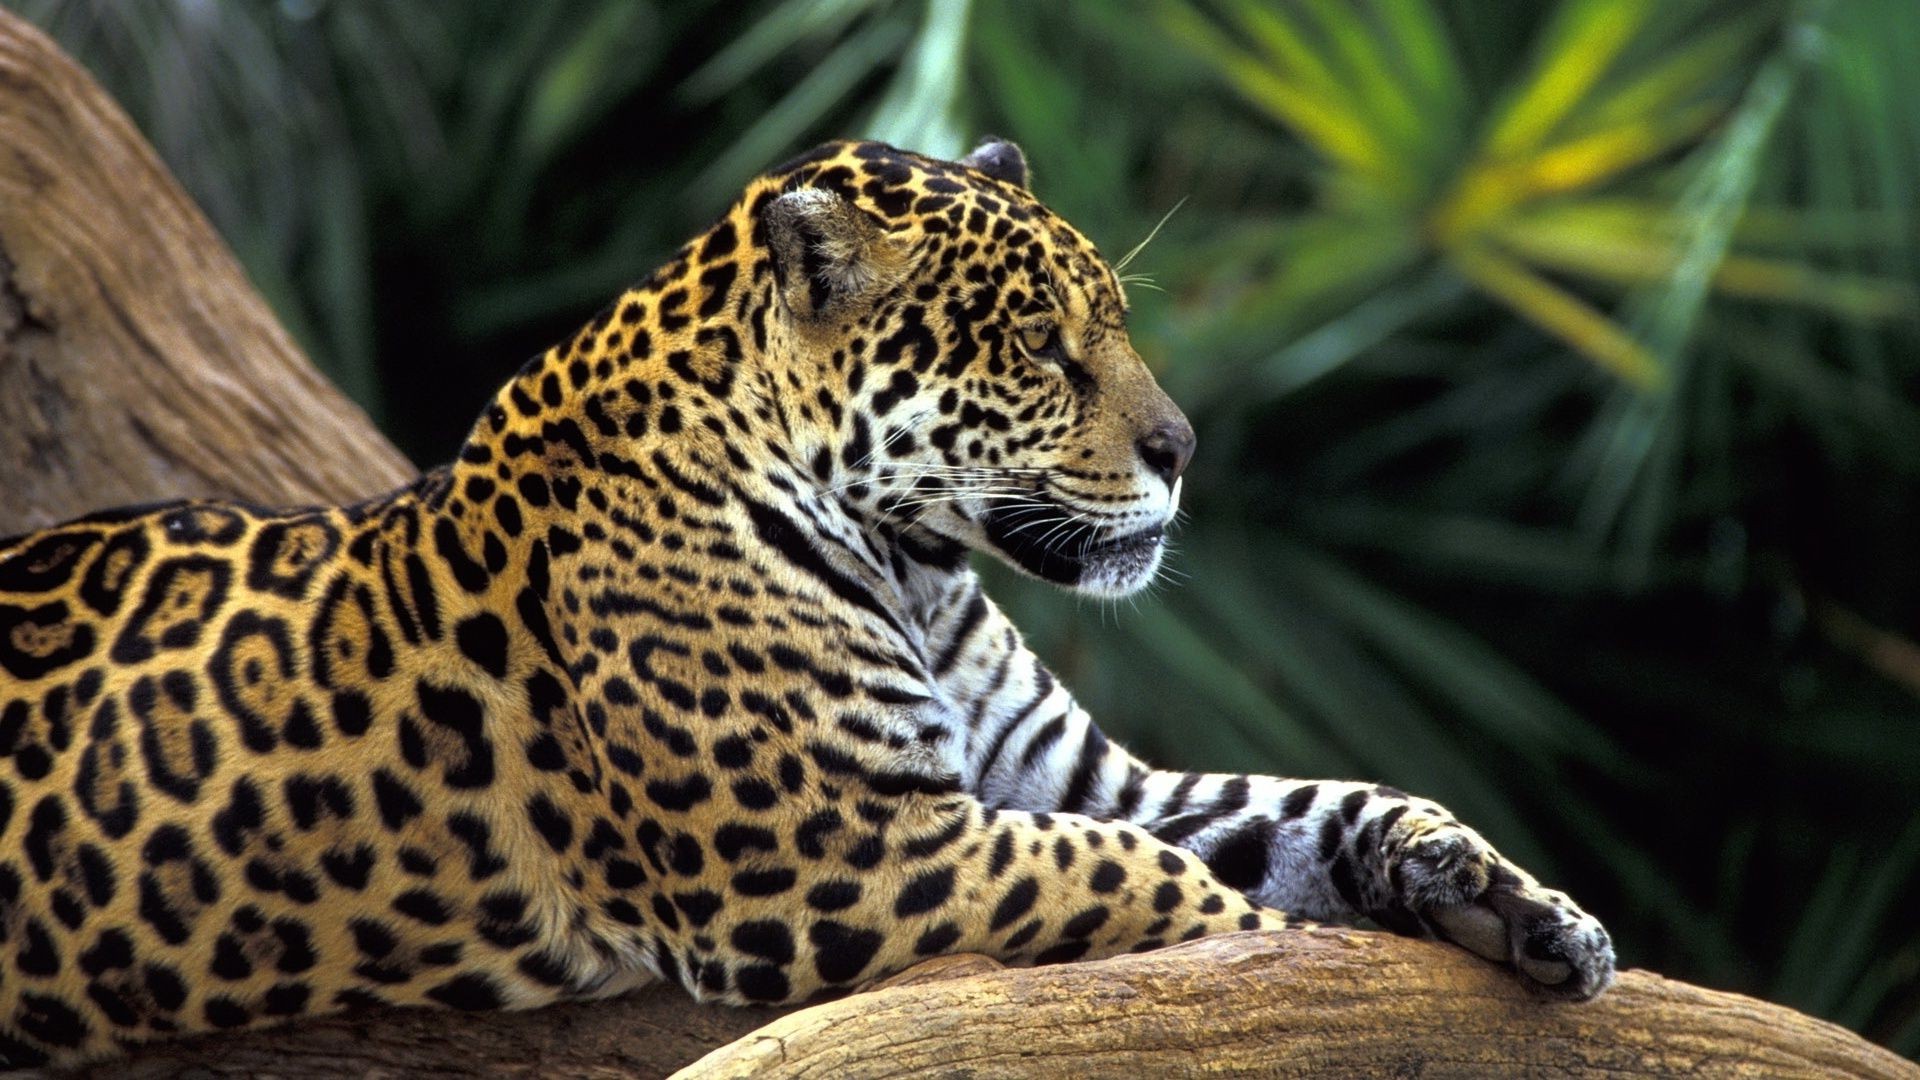 leopards wildlife mammal cat nature wild leopard animal jungle zoo